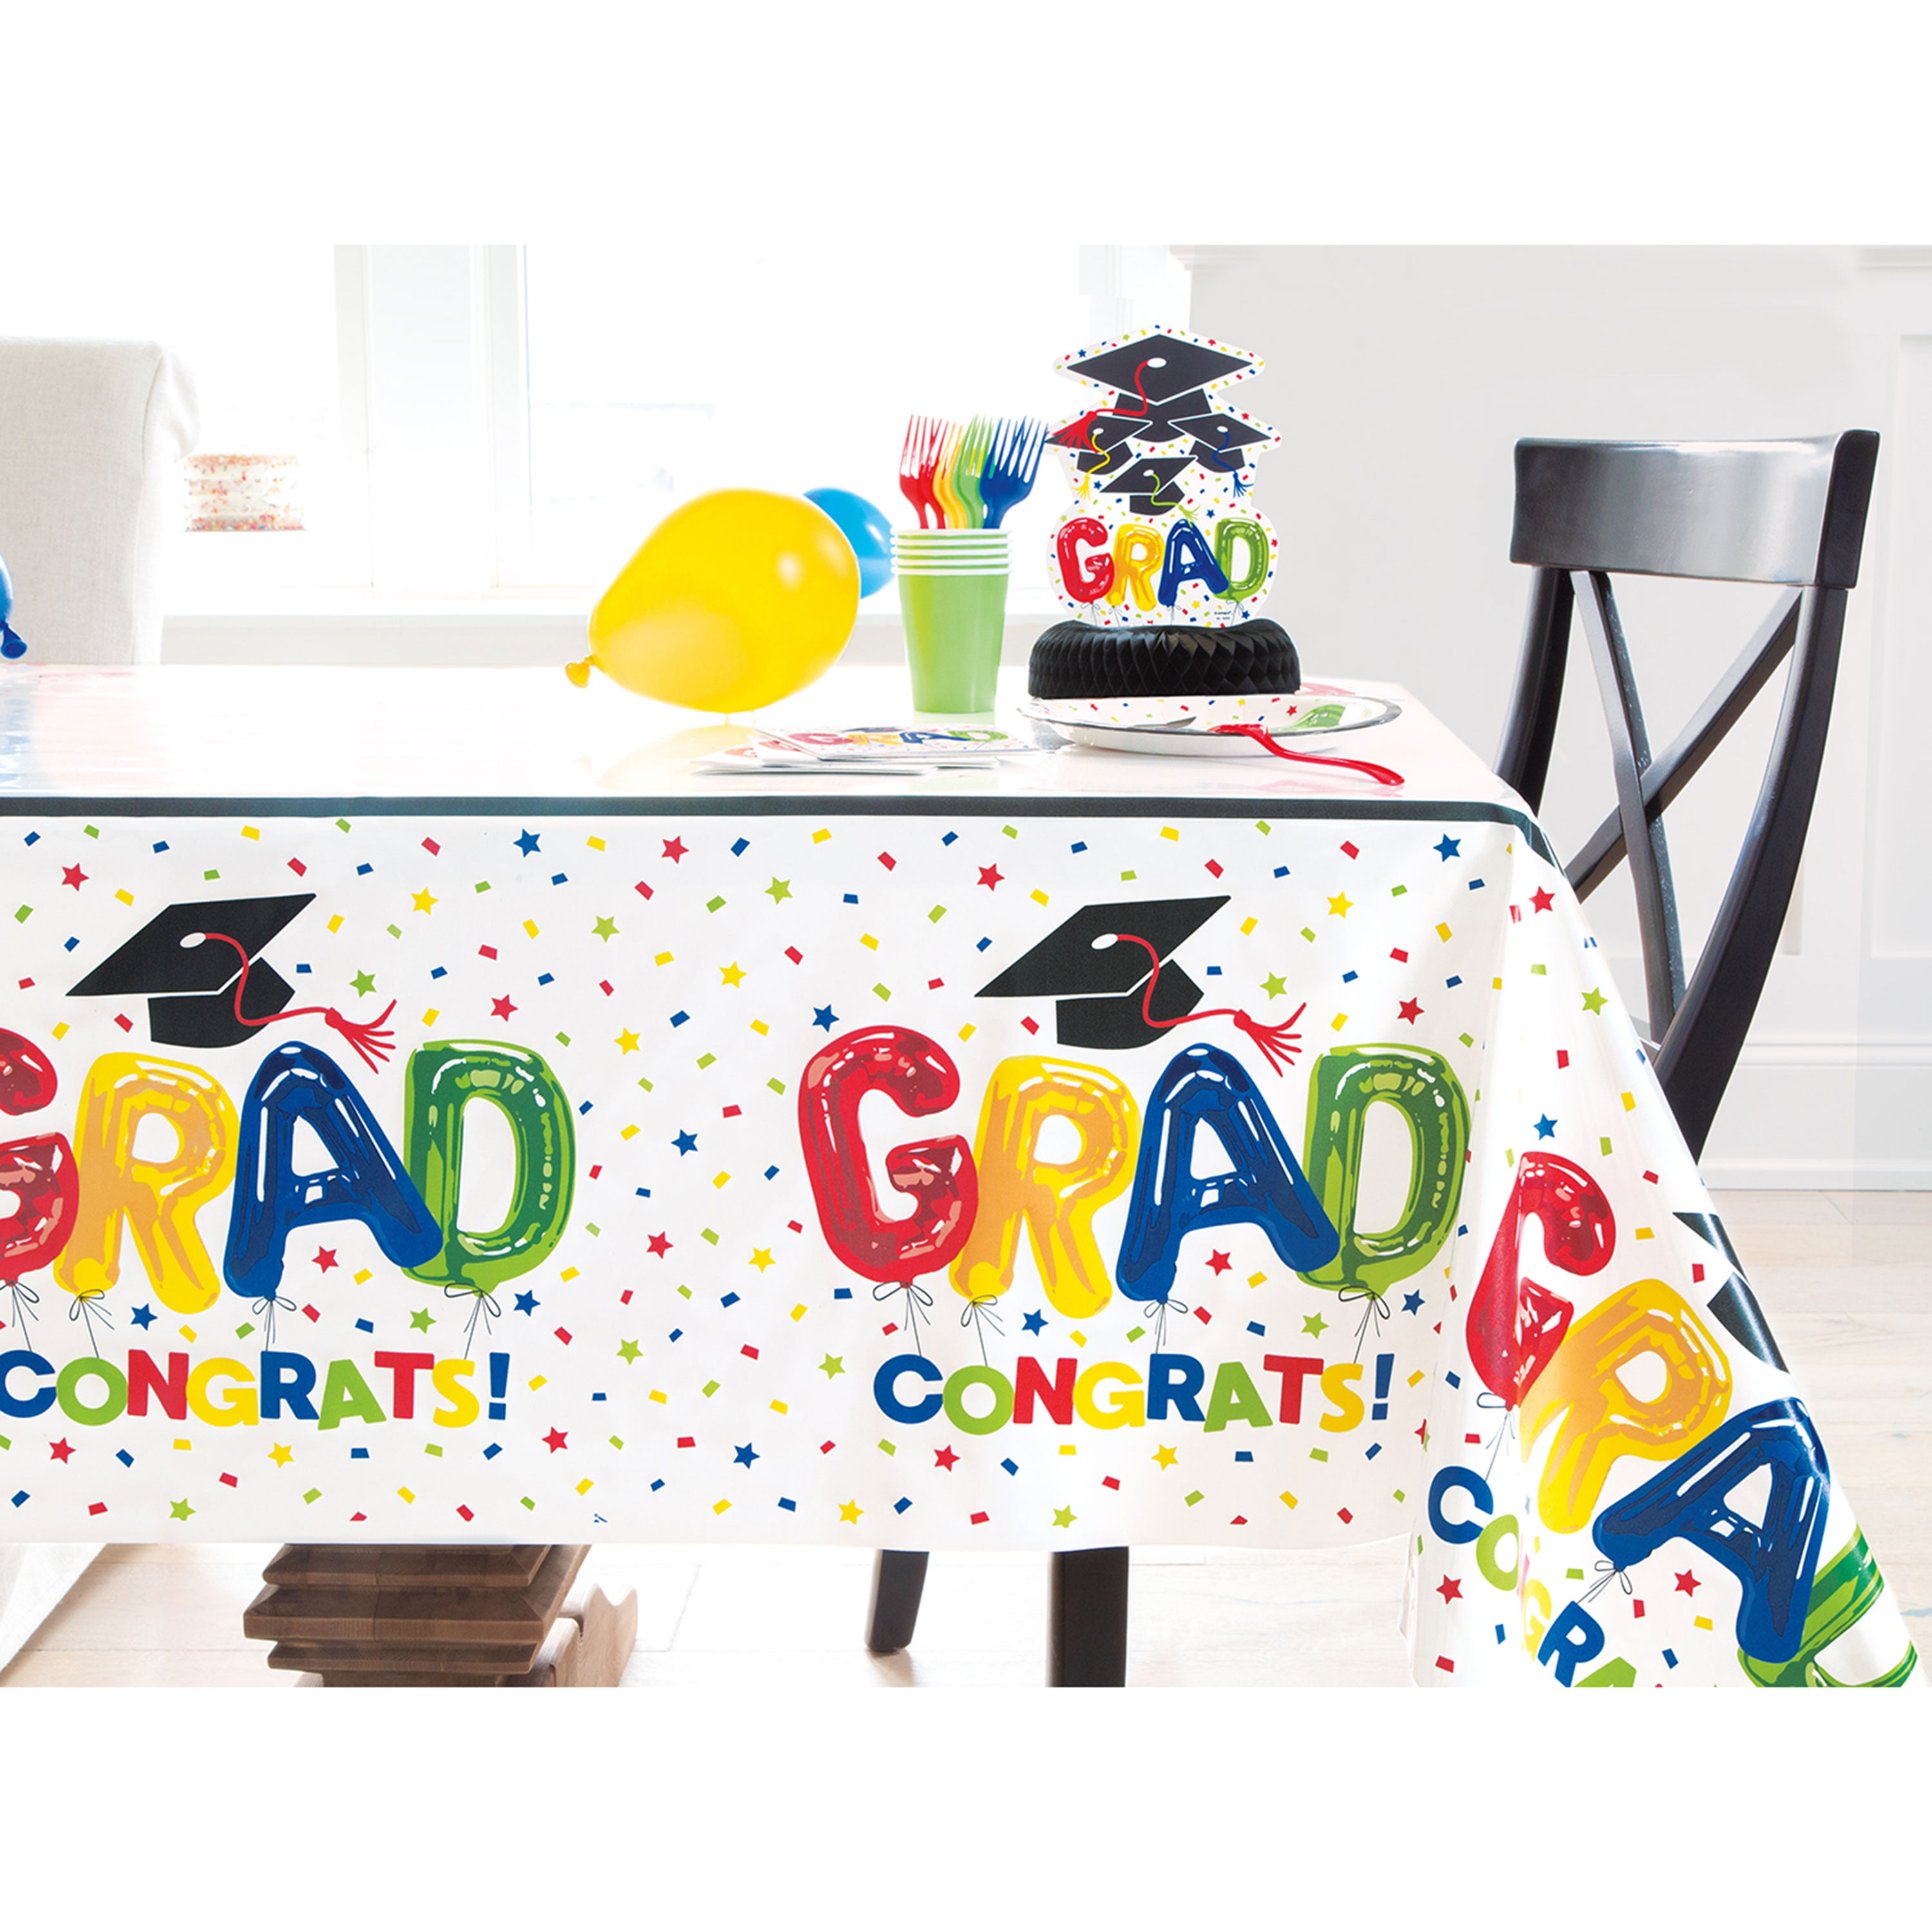 Cool Graduation #CONGRATS GRAD Emoji Tablecover Party Tableware 54 x 84,Pack of 3 Plastic 